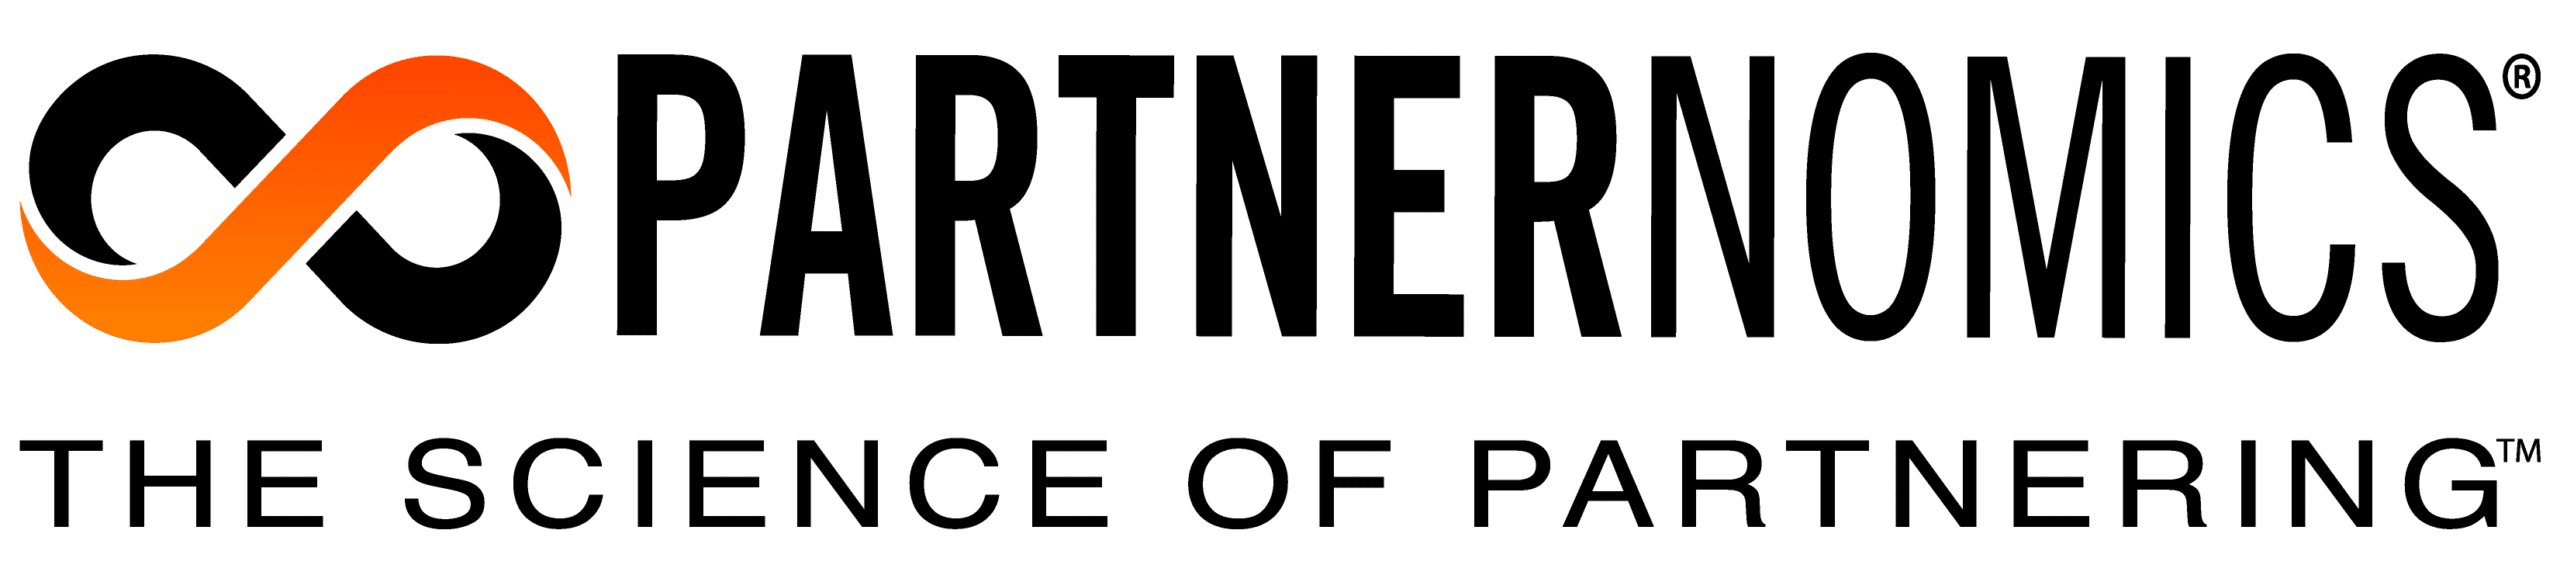 Partnernomics_logo-1